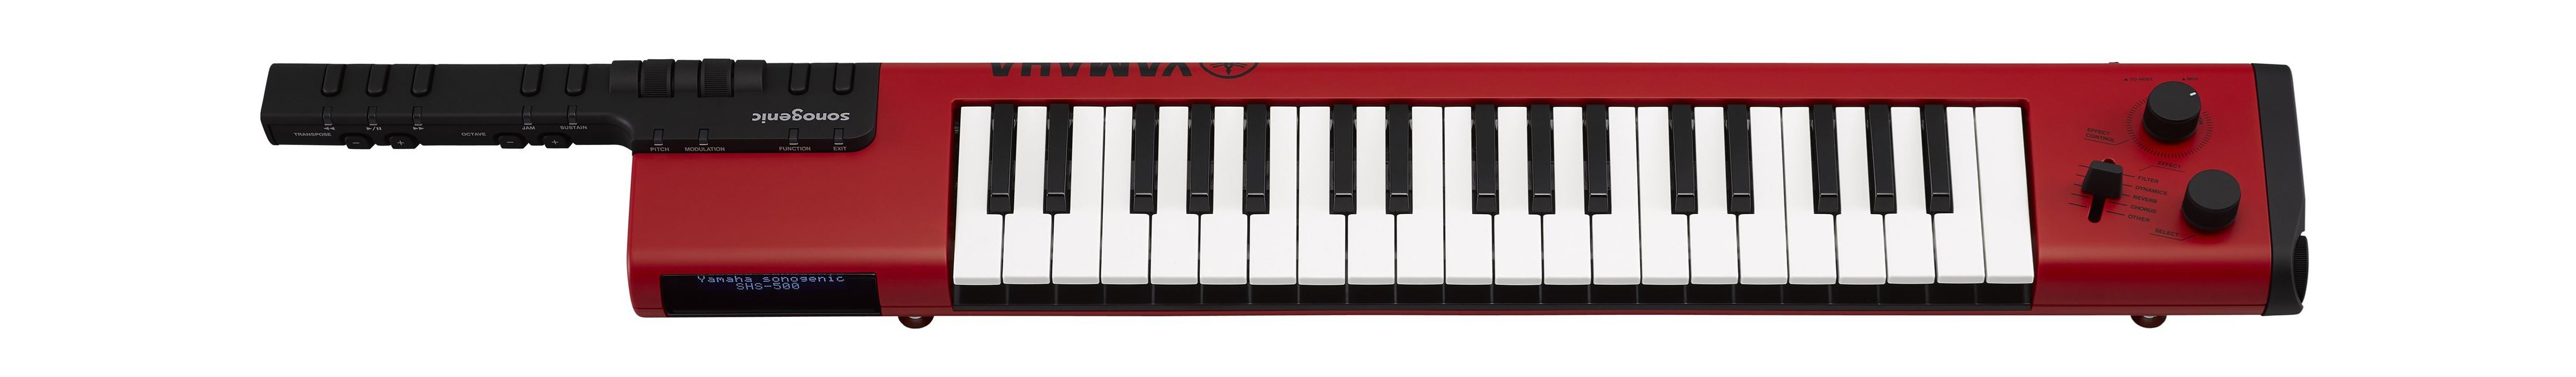 Yamaha - Sonogenic SHS-500 - Keytar Keyboard Controller (Red)